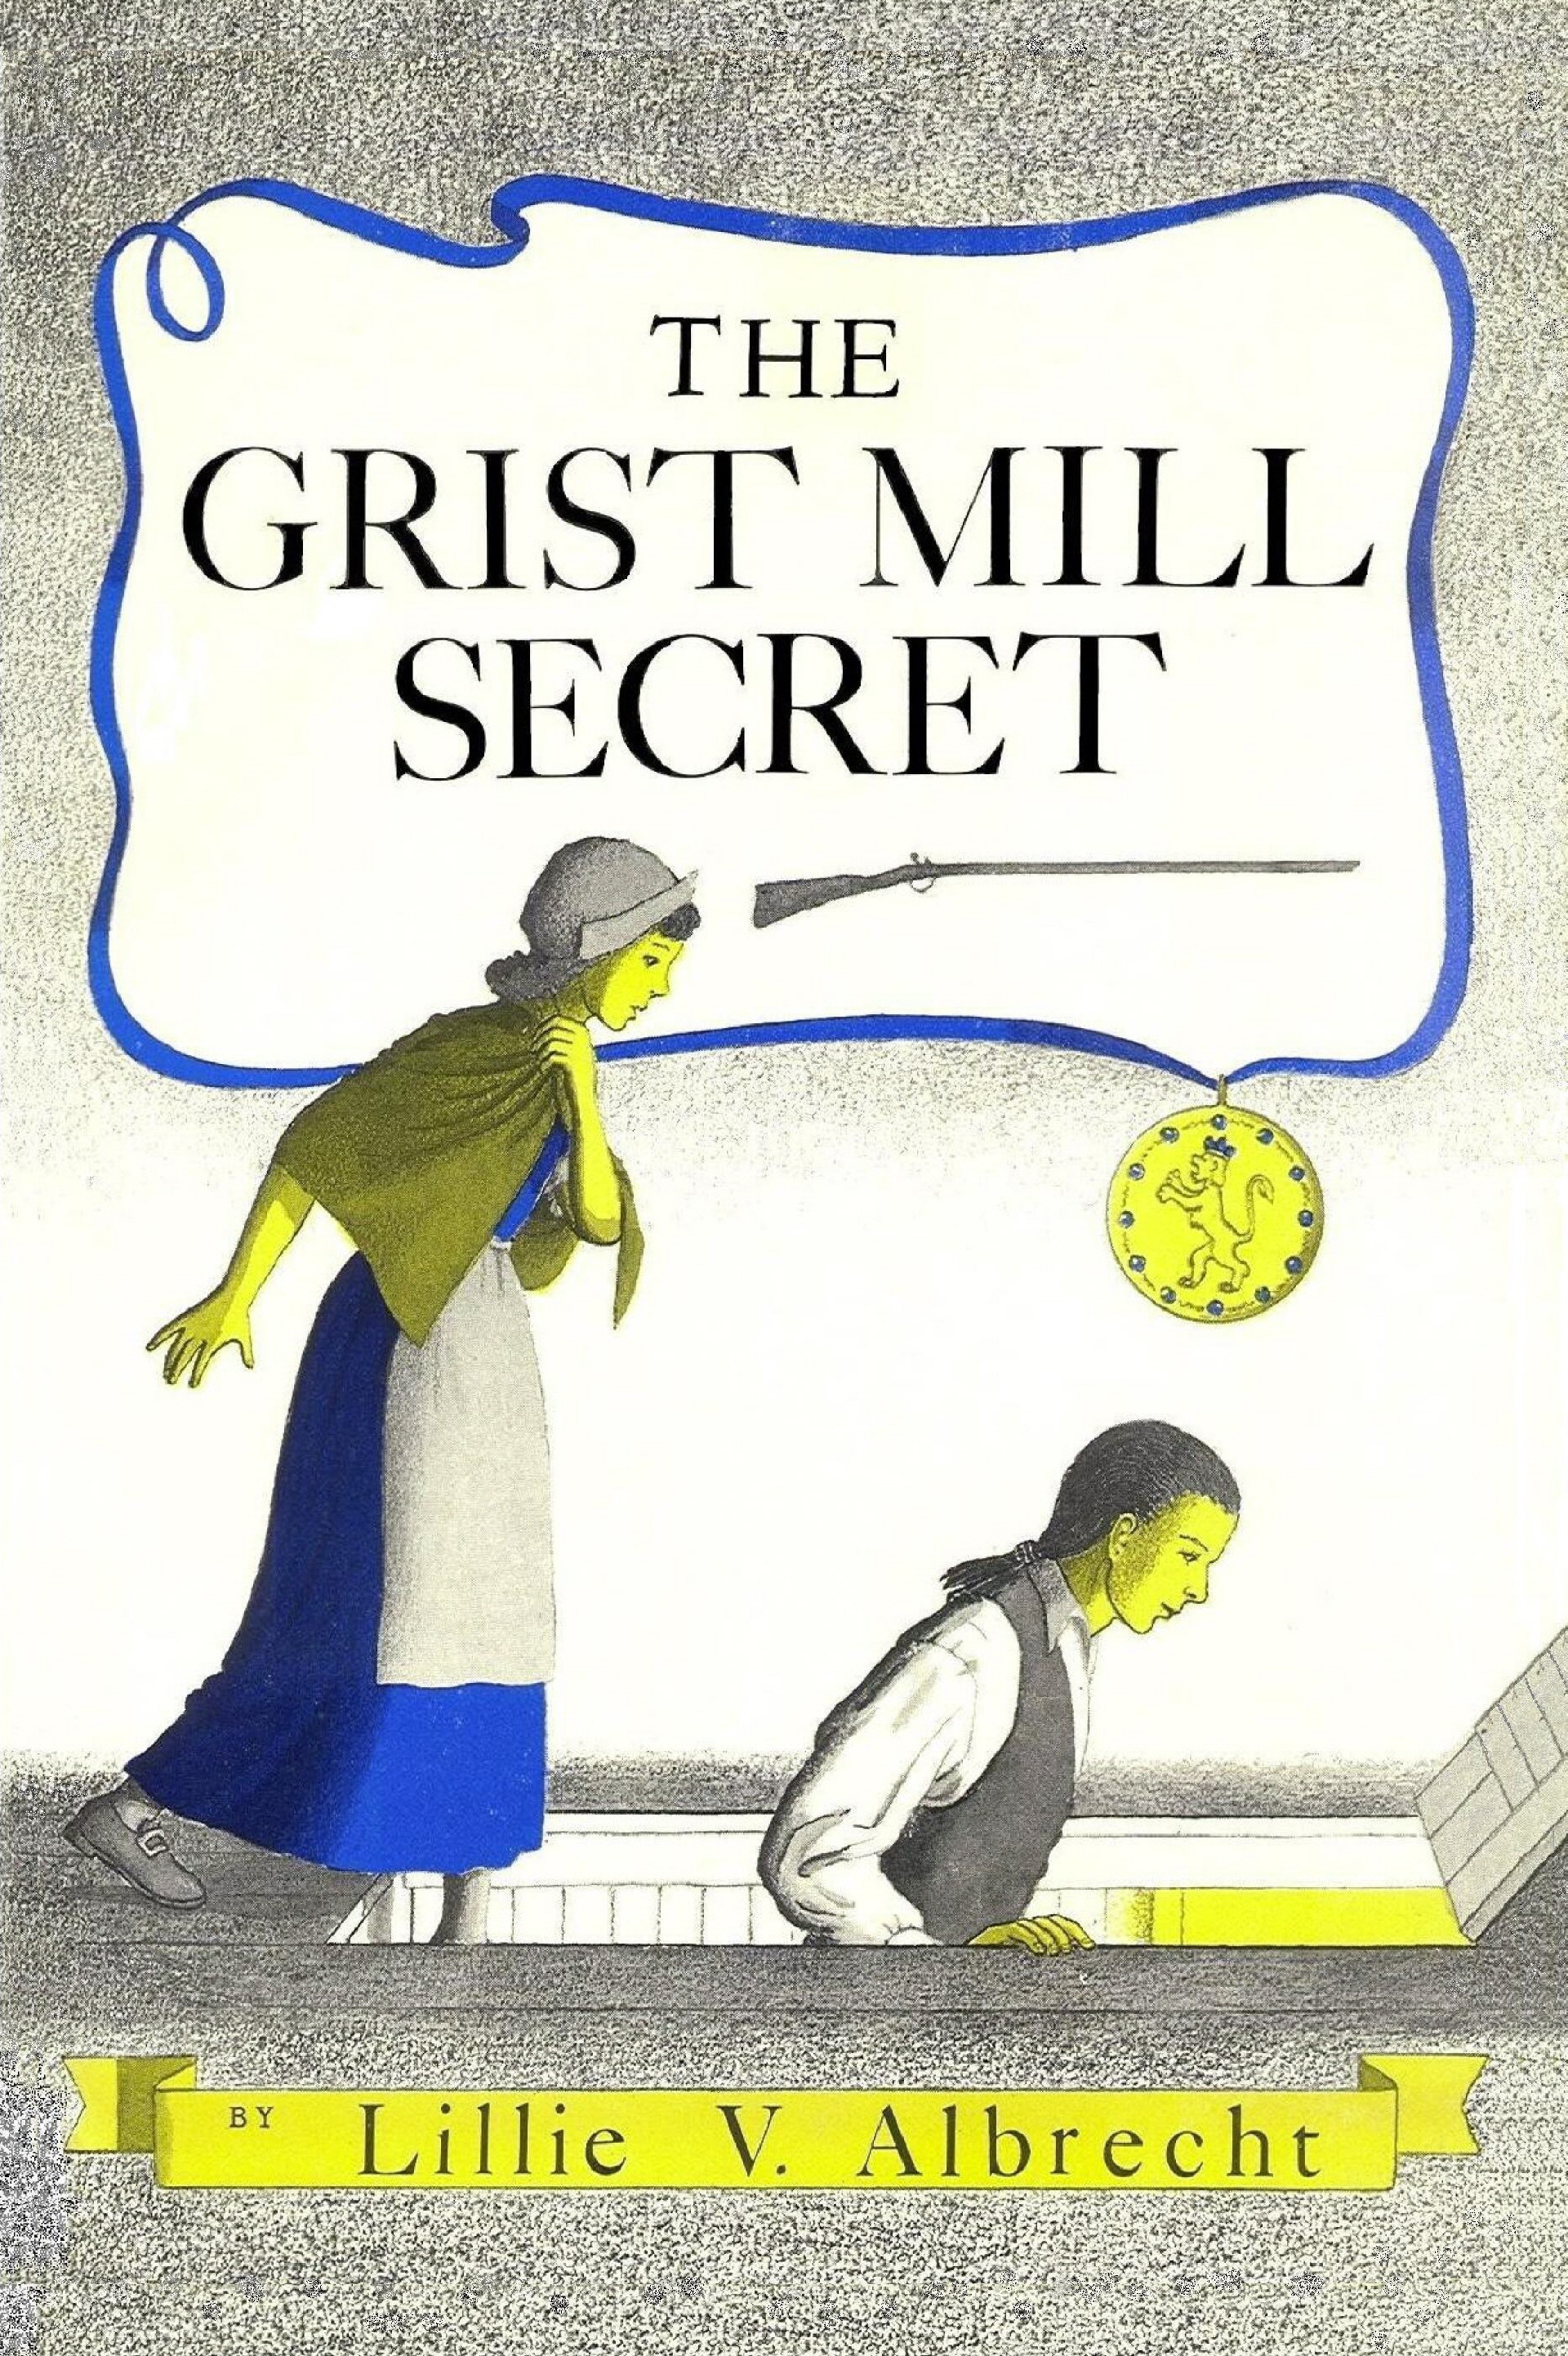 Lillie V. Albrecht - The Grist Mill Secret